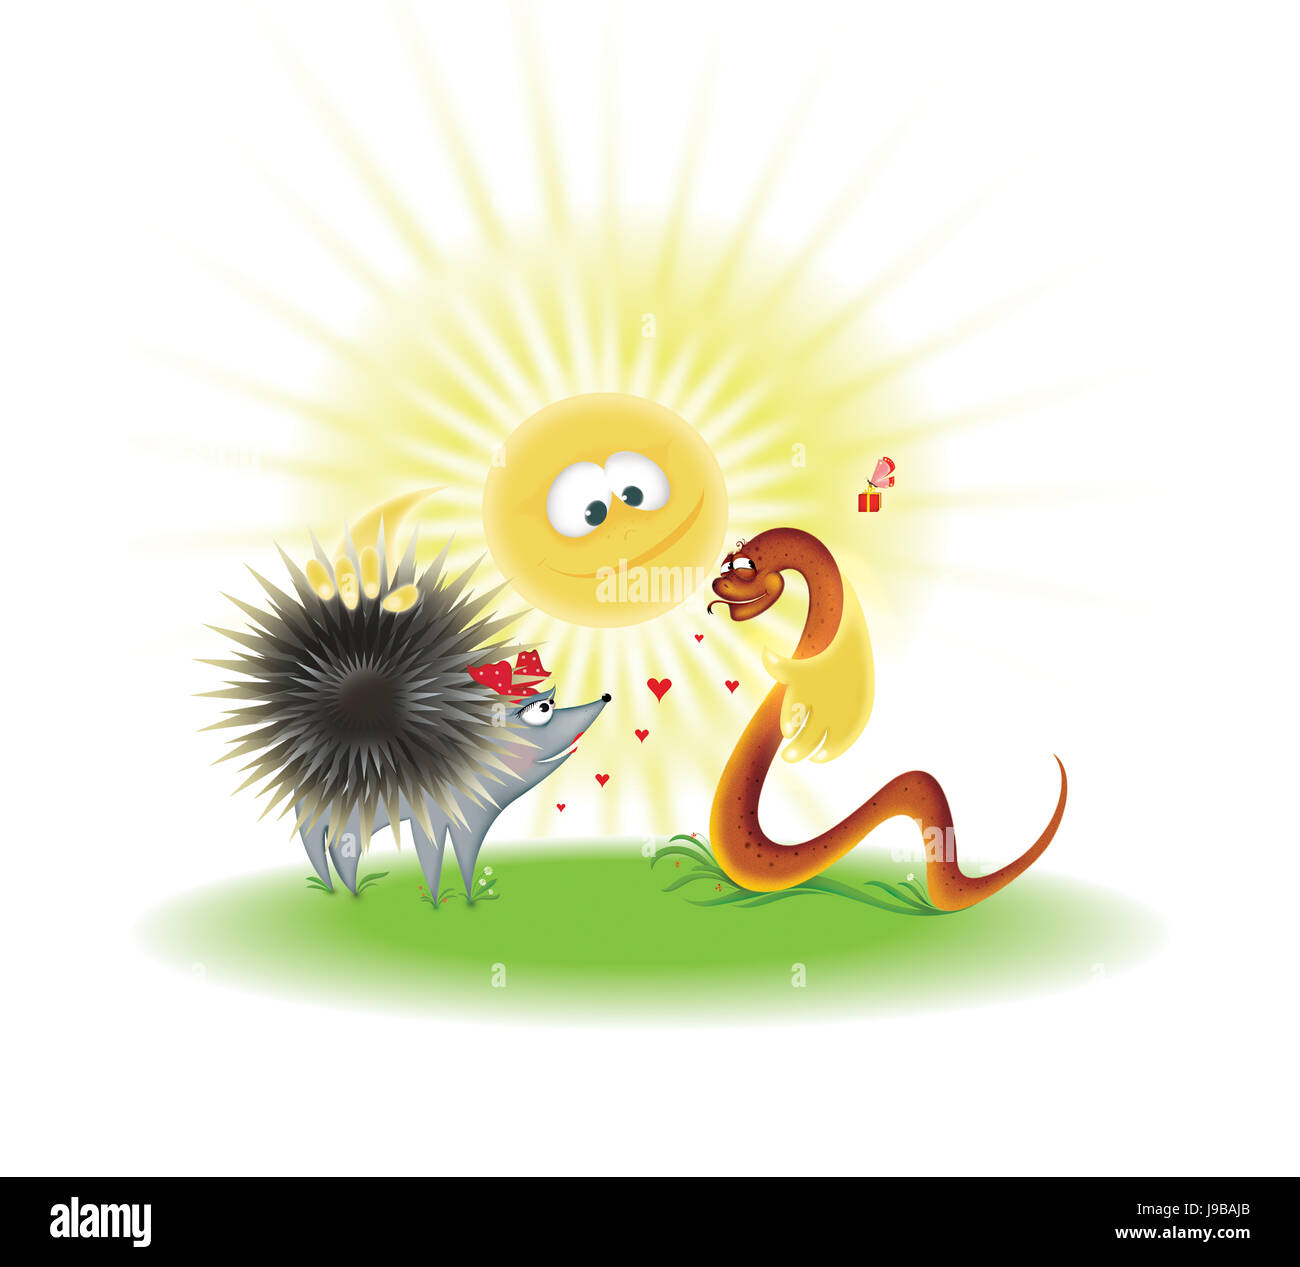 Ежик и змея. Ежик обнимает солнце. Ежик обнимает солнышко. Змея на солнце.